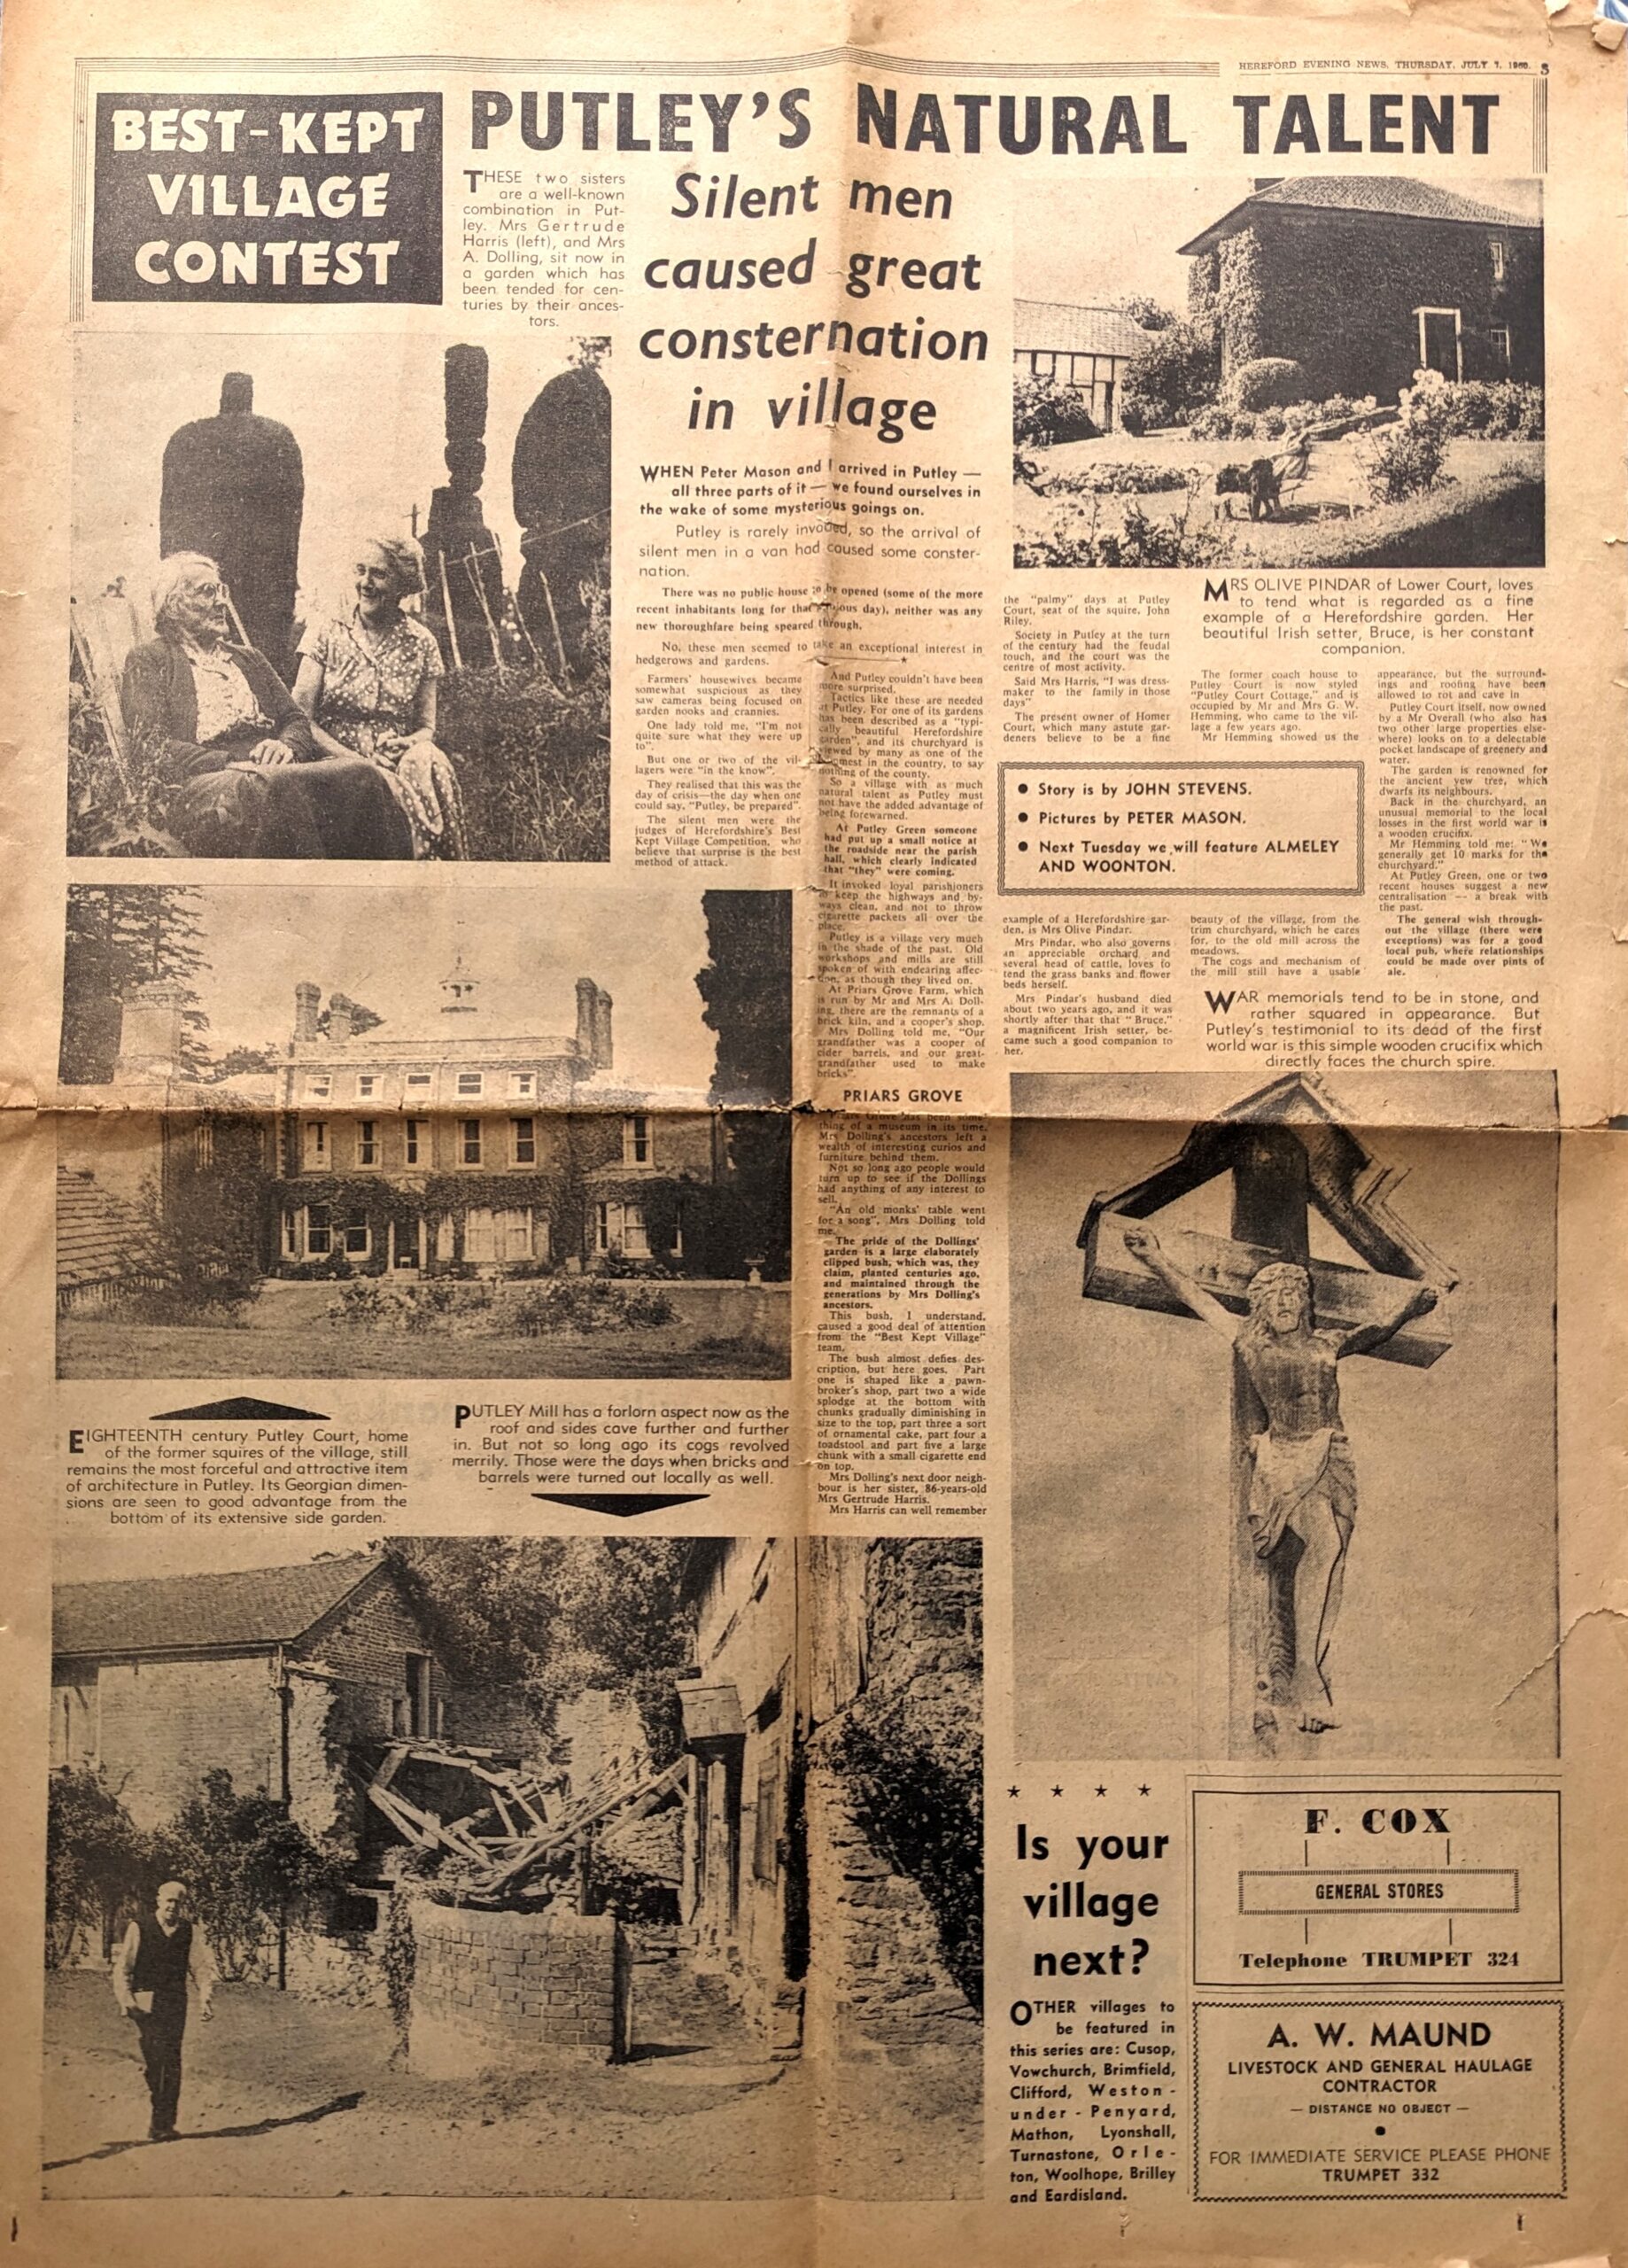 Hereford newspaper cutting of Putley Gardens